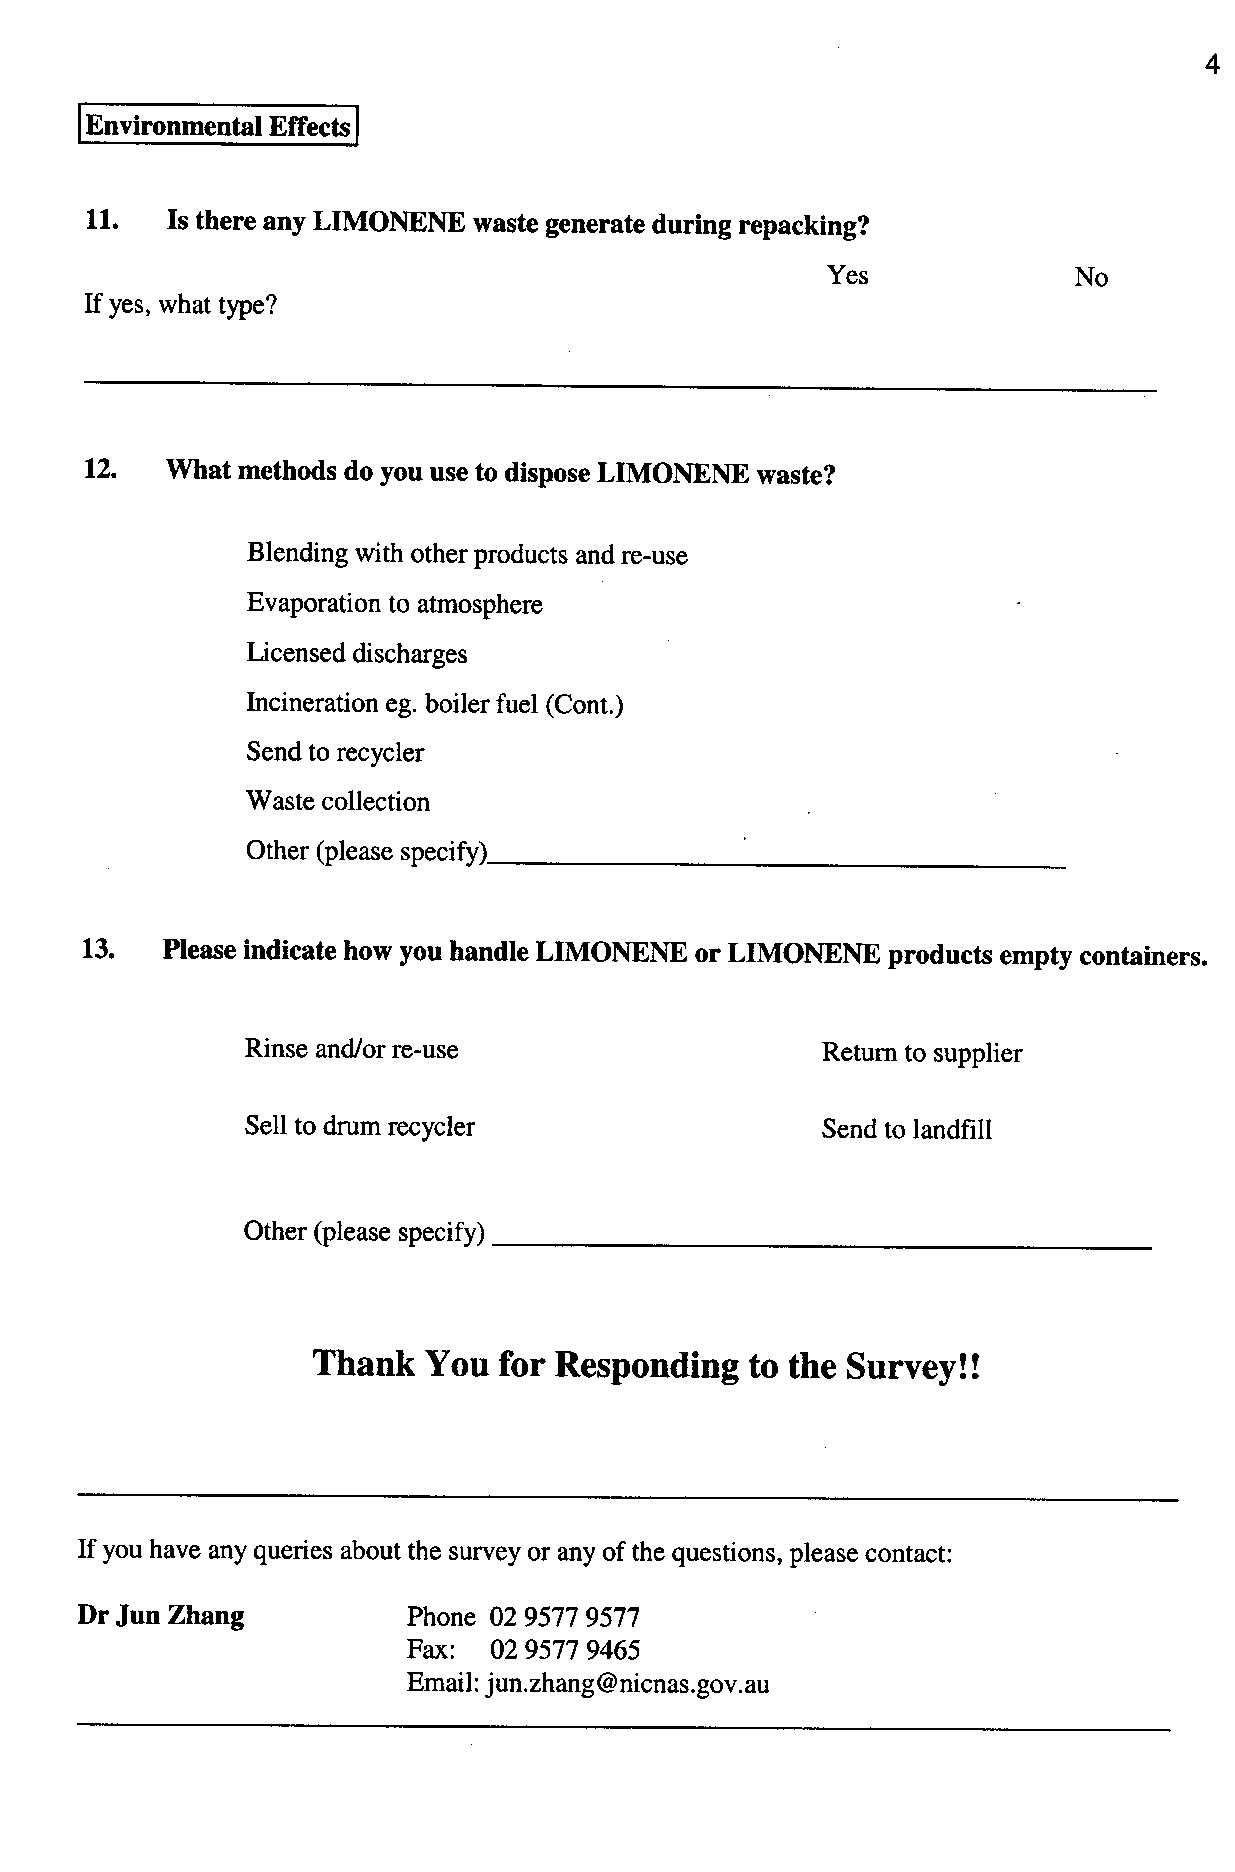 5th page survey